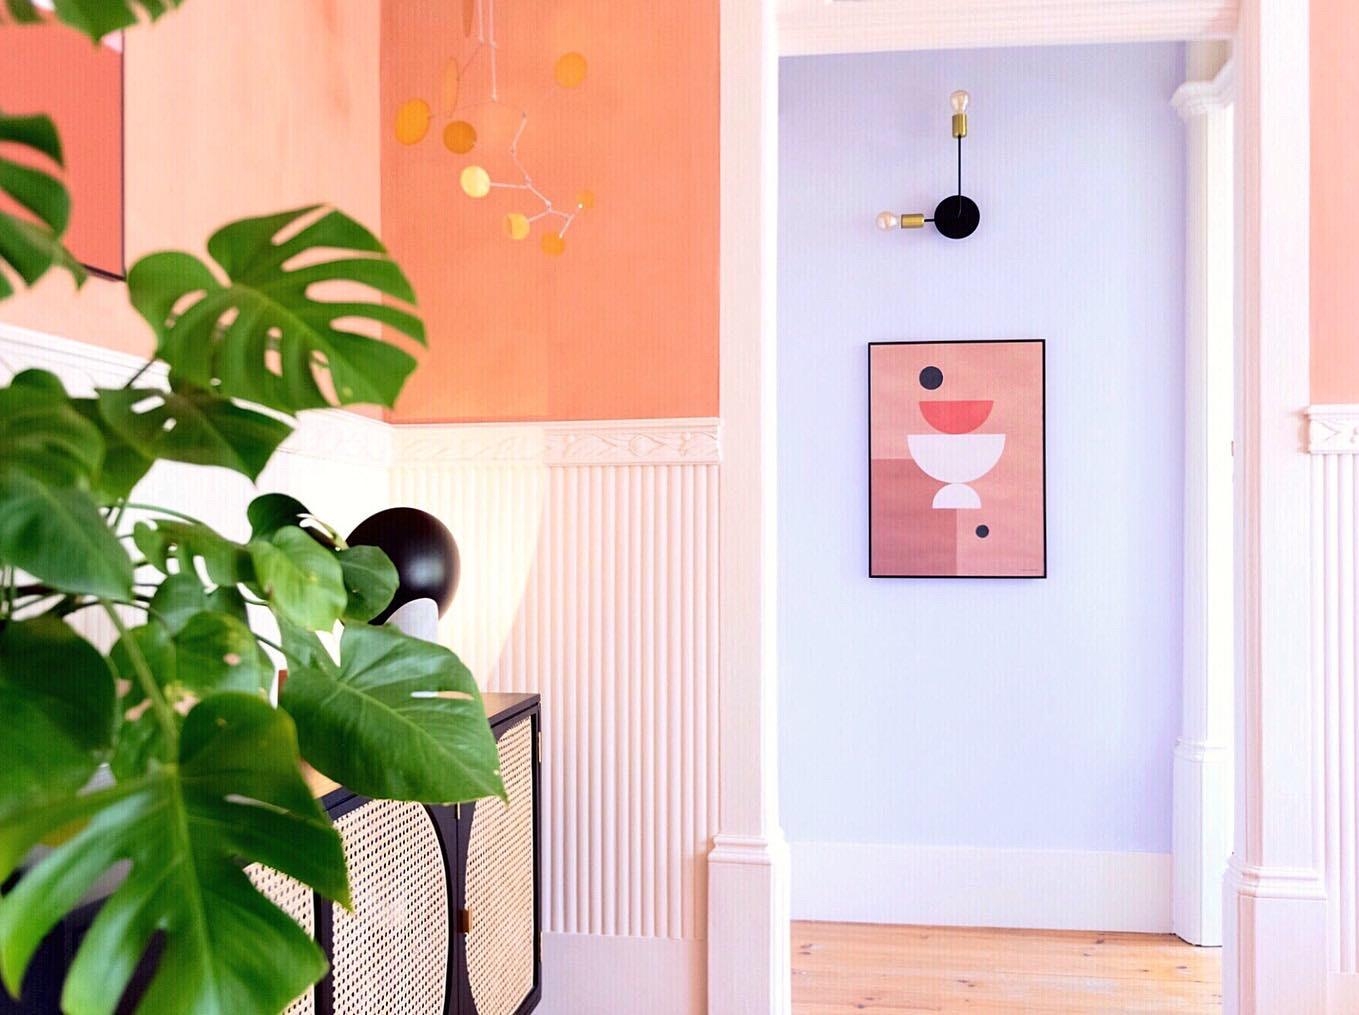 Liebe die Farbkombi ☺️🌈
#livingroominspo #eclectic #colorfulinterior